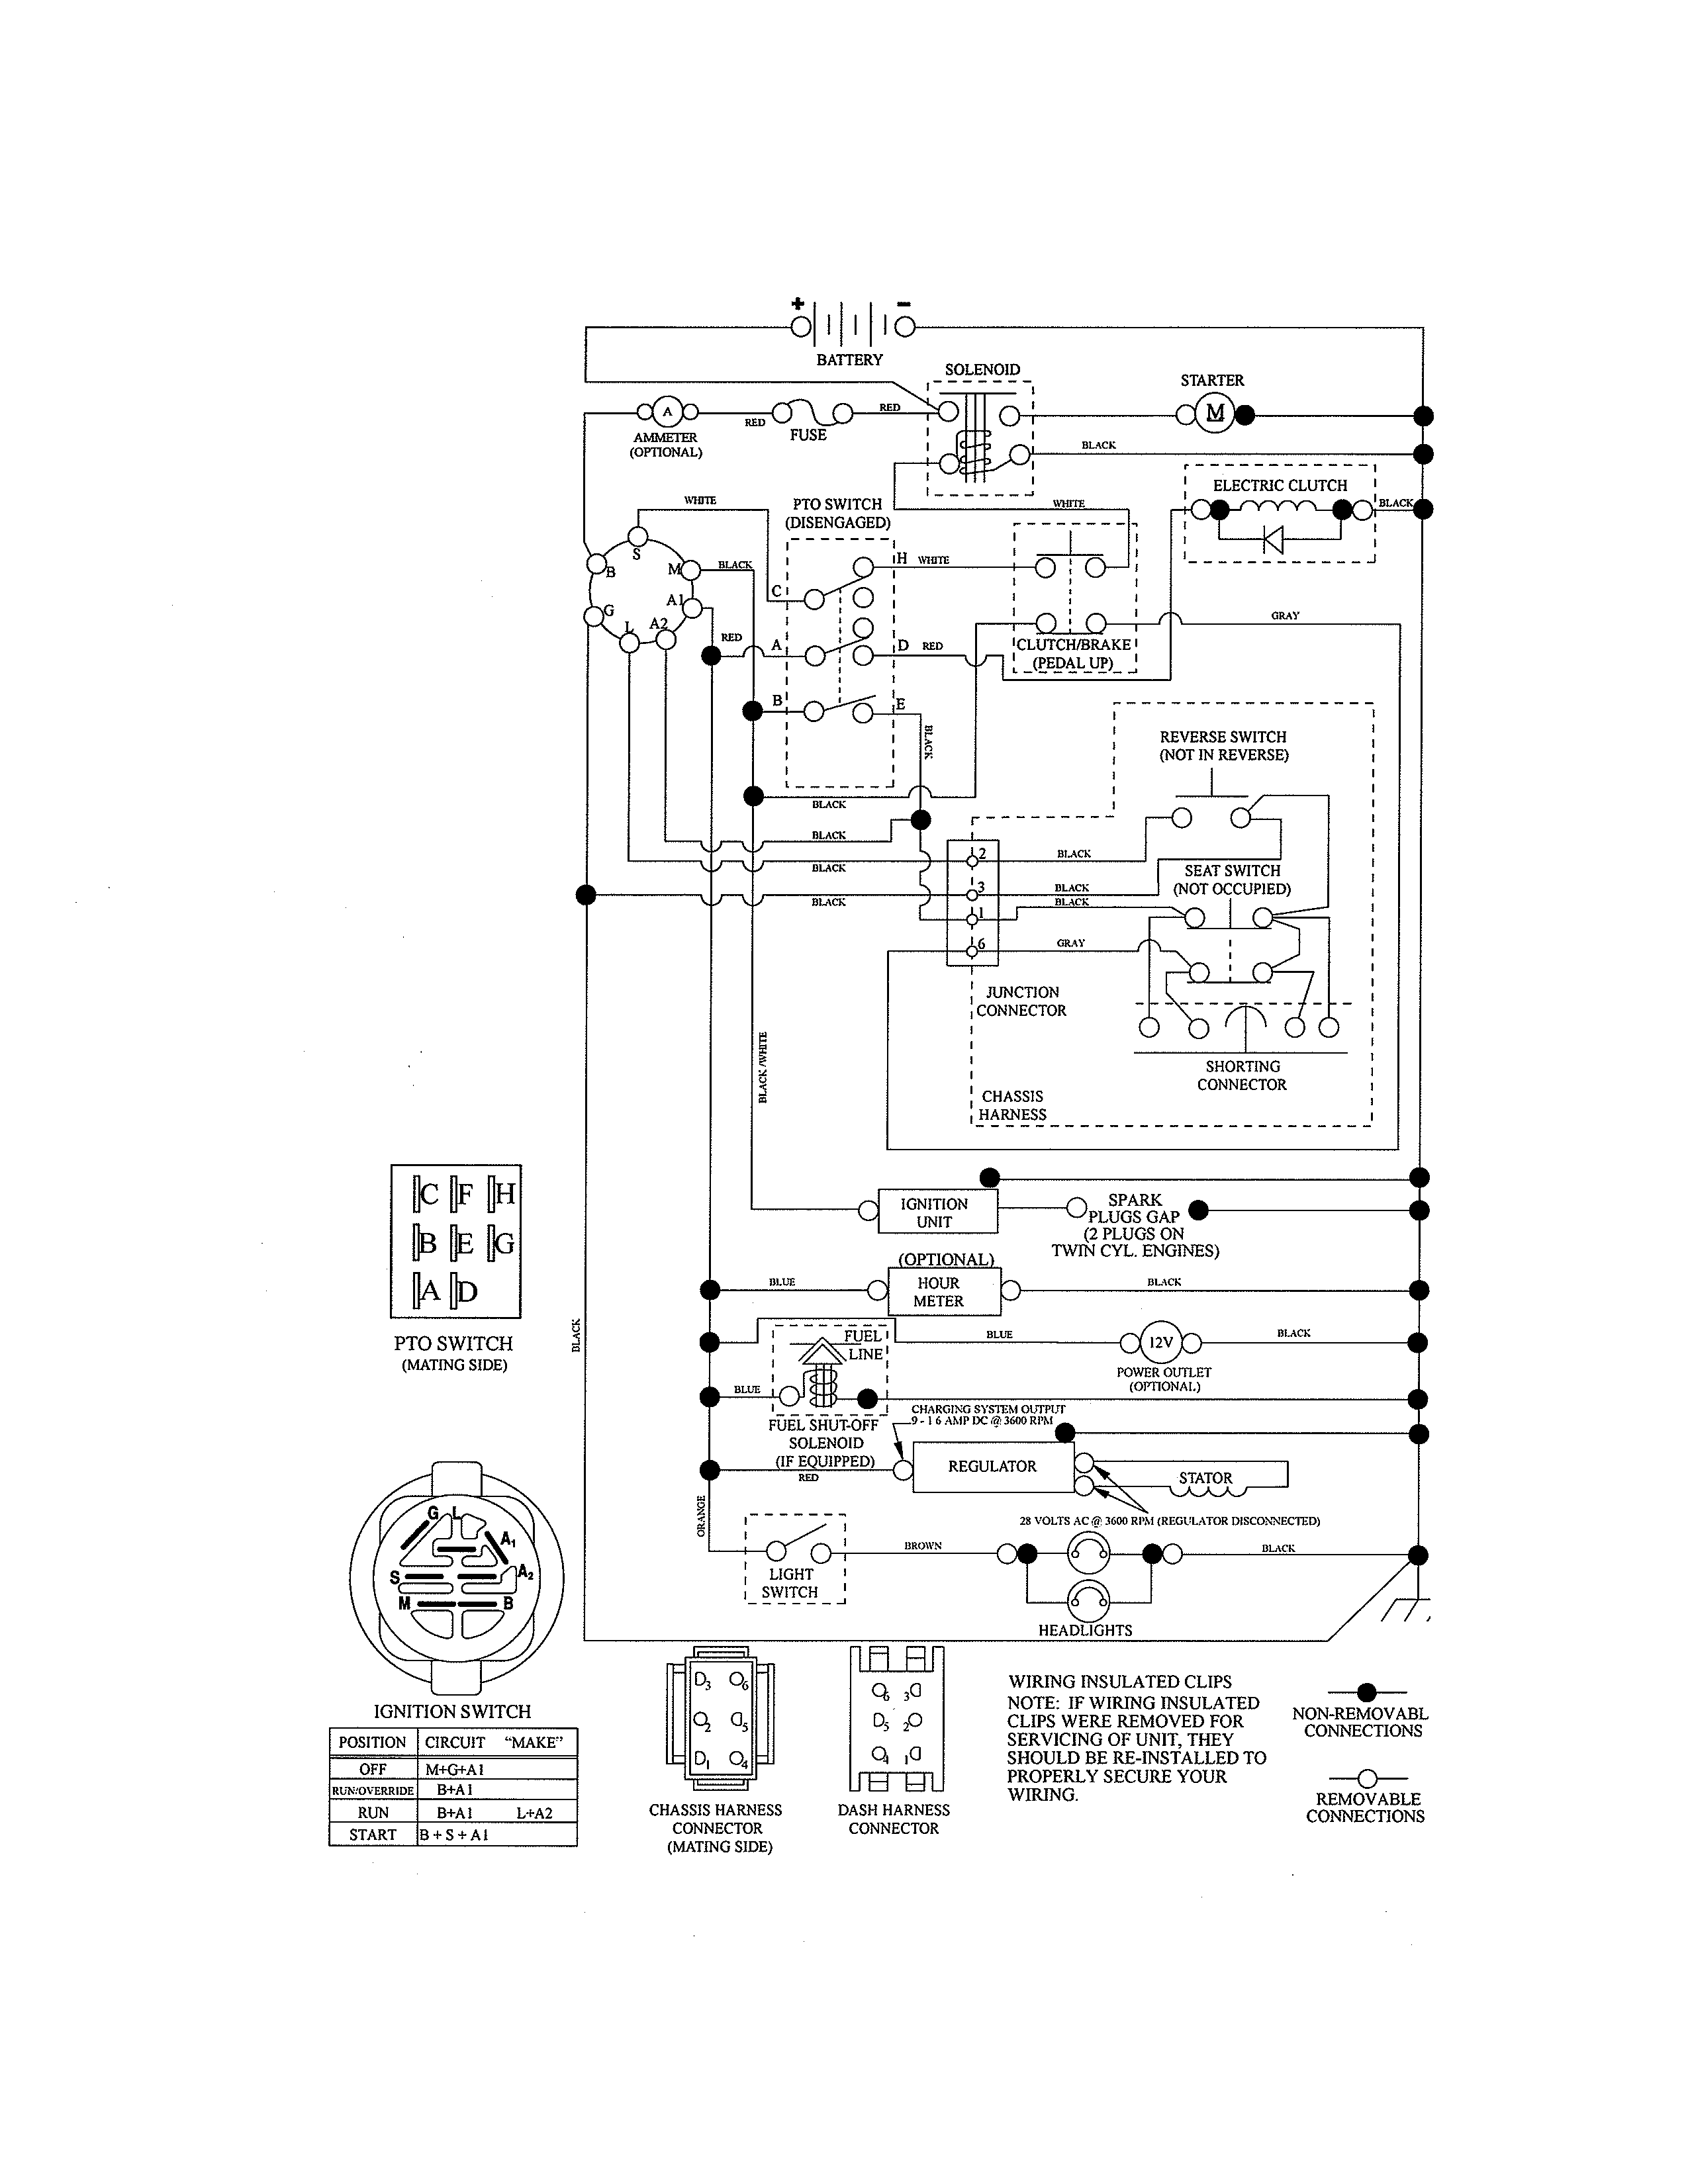 wiring diagram craftsman 6000 tractor - Wiring Diagram